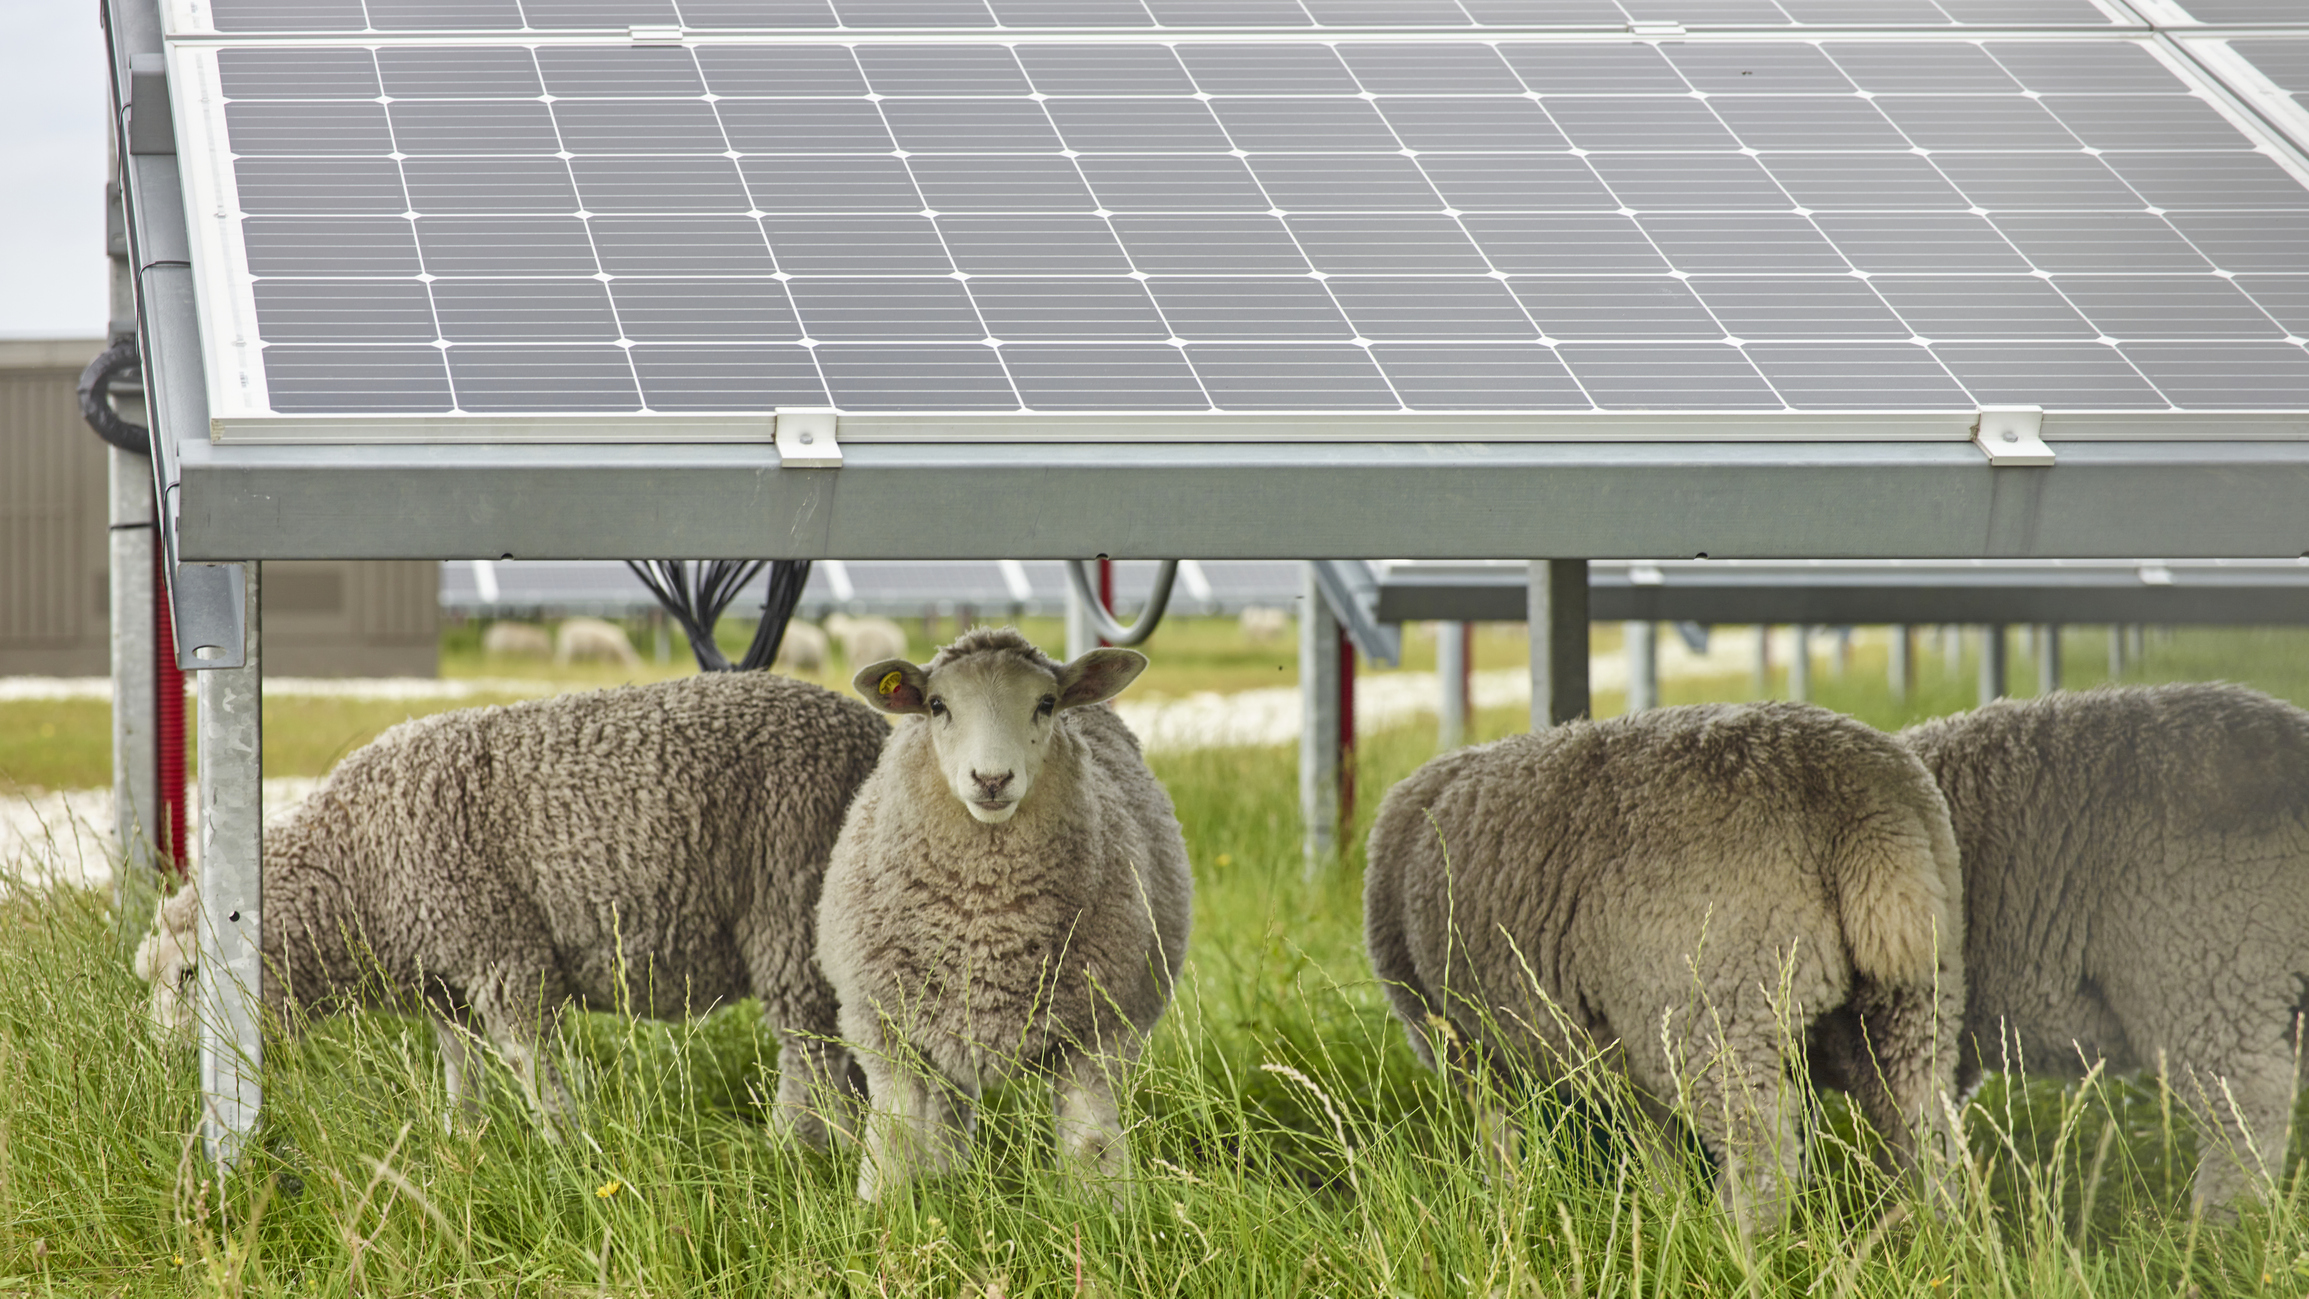 Sheep standing under solar panels on farmland.